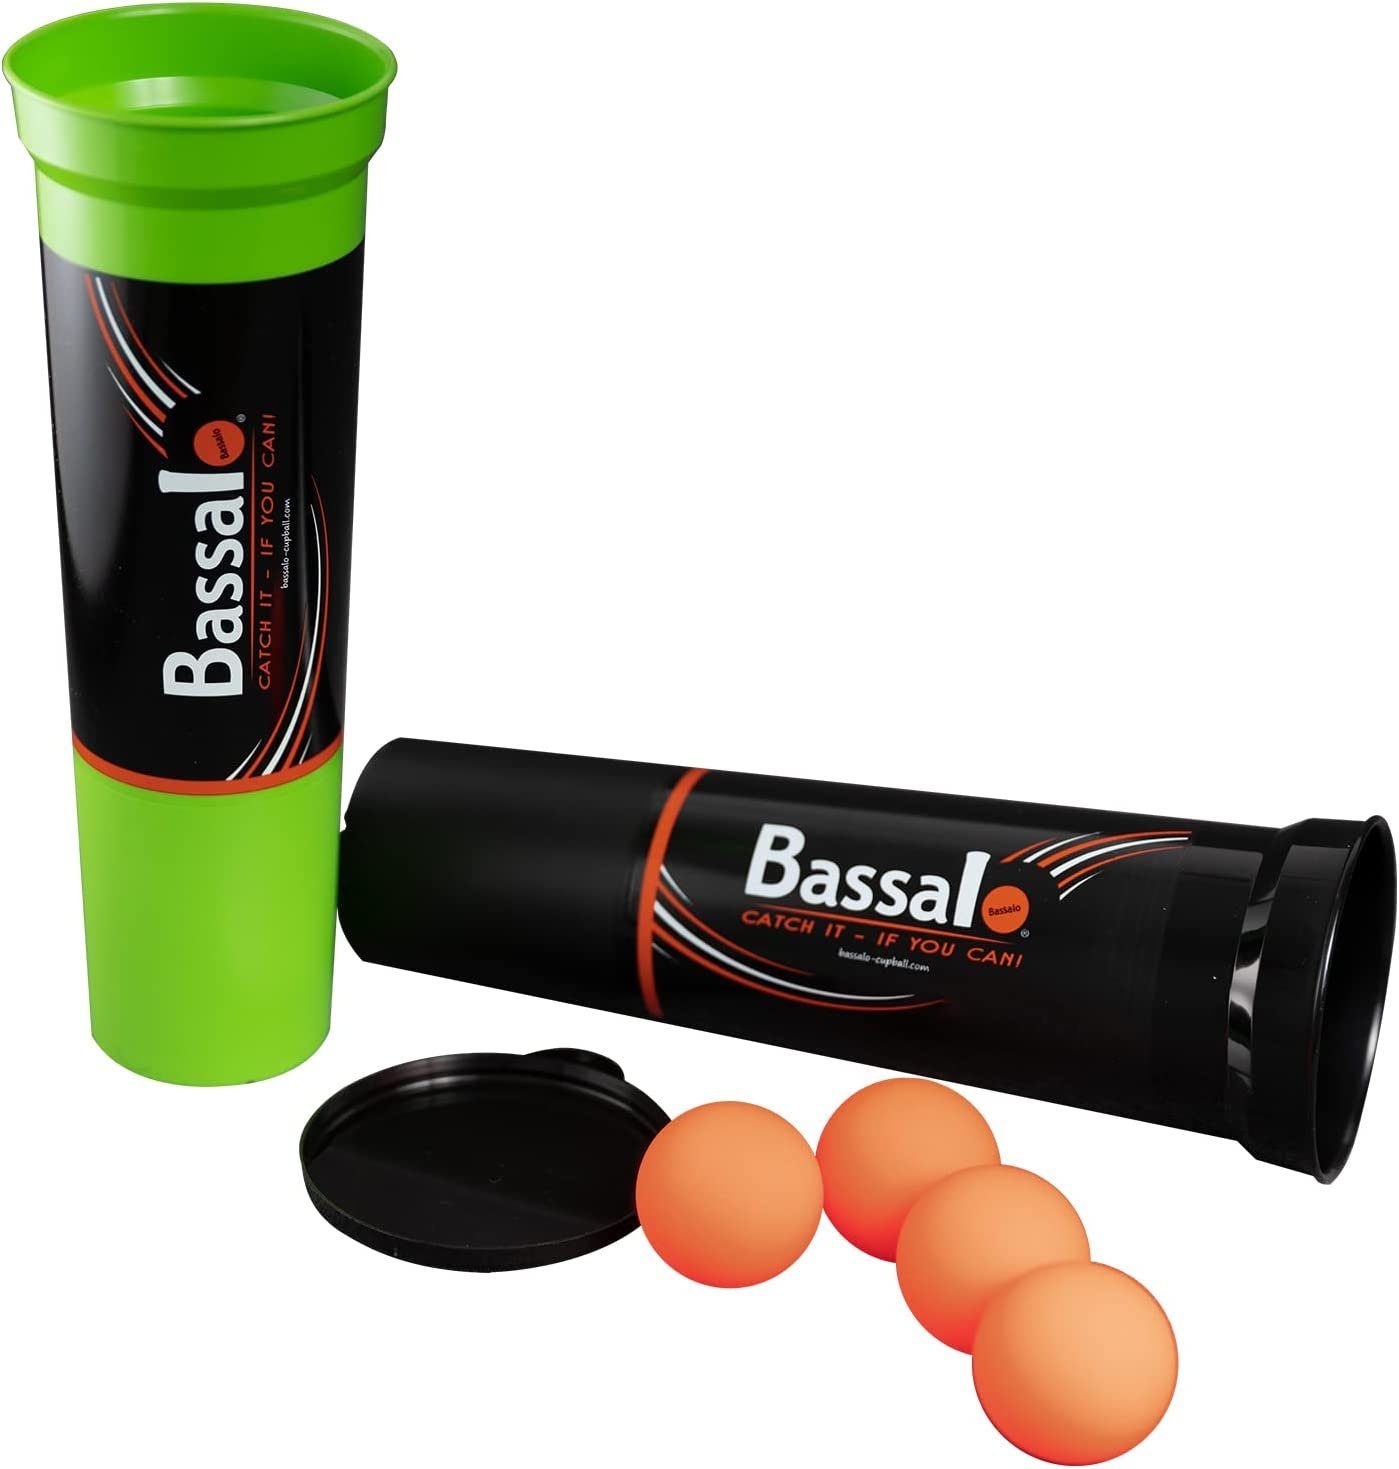 Bassalo Spielball Cupball in Germany Plus 4 Spielanleitung, 2 Indoor, Starter-Set Bälle, und - 2er Made Becher, Outdoor